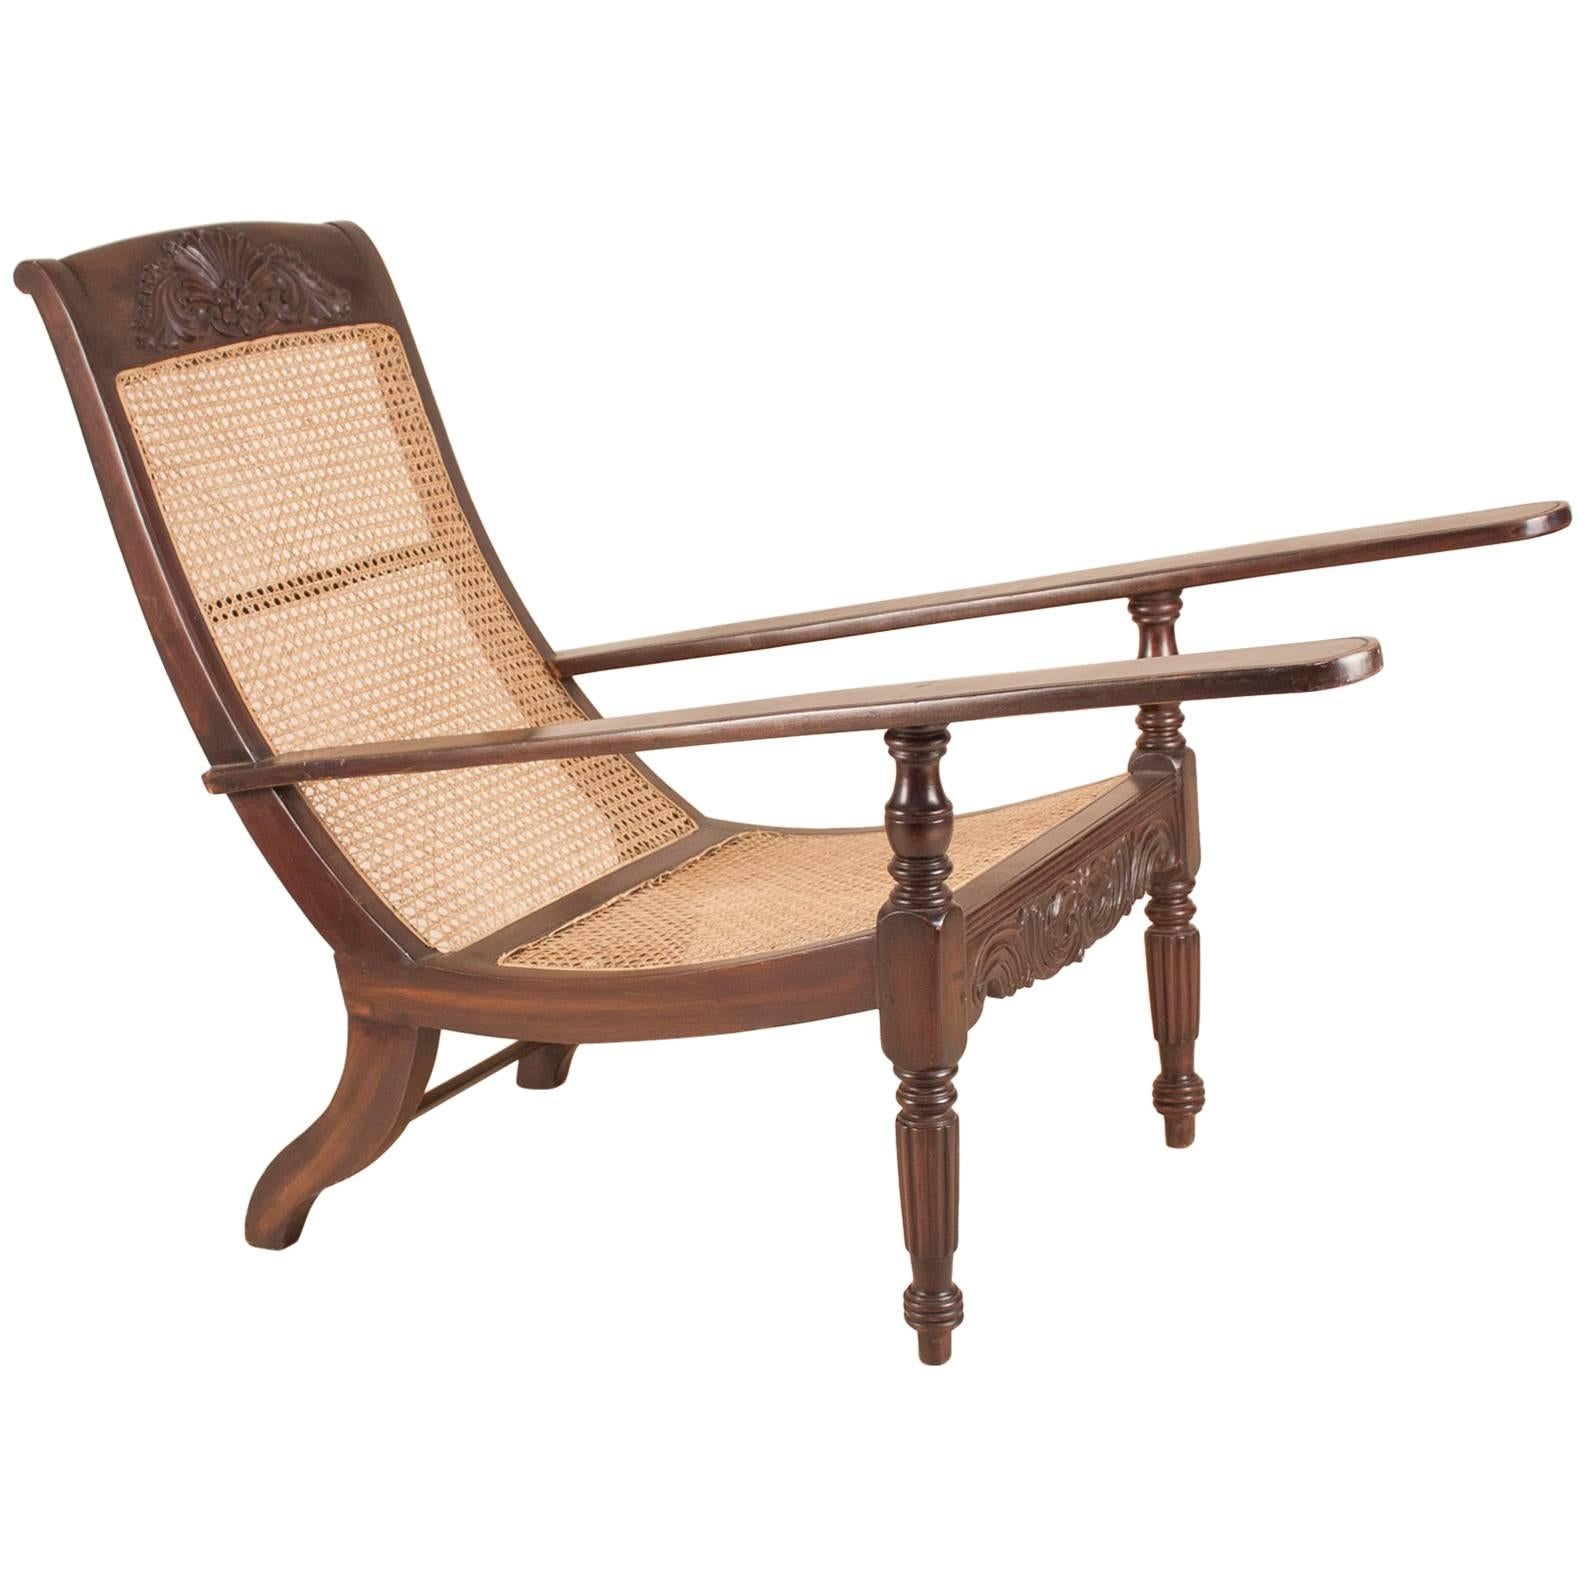 Indo-Portuguese Exotic Hardwood Plantation Chair